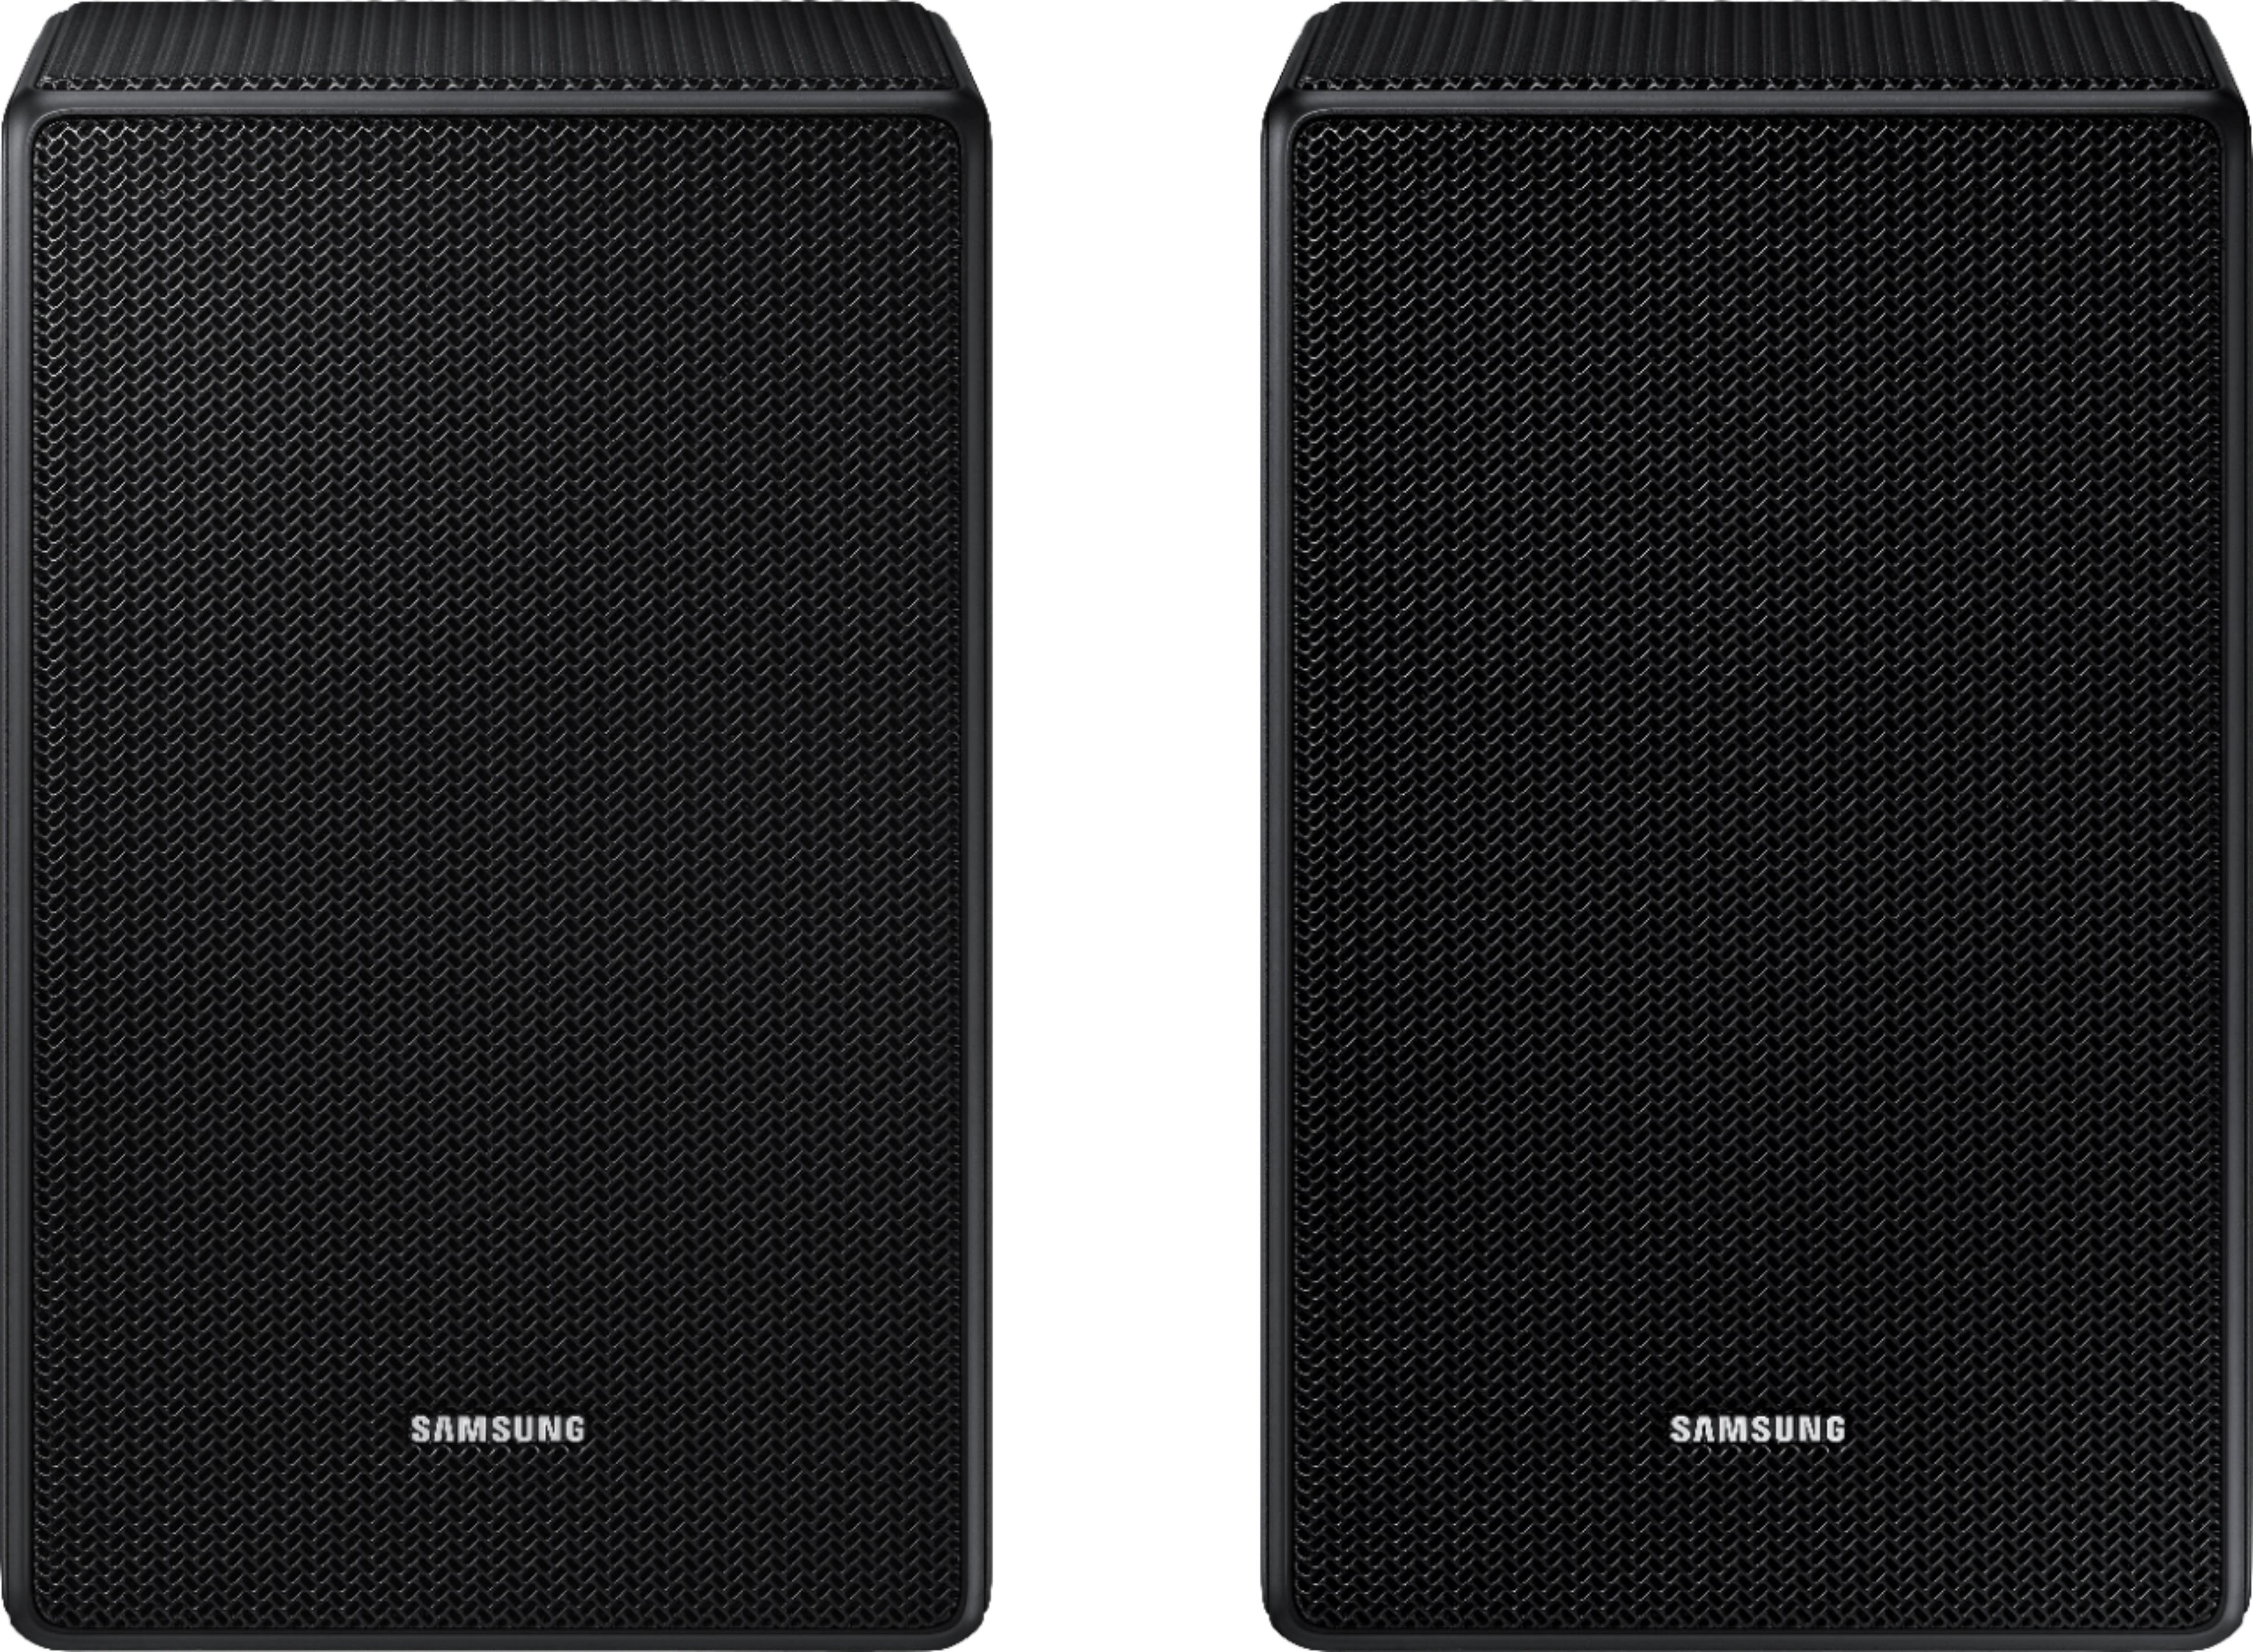 Dræbte Uredelighed lån Samsung 2.0.2-Channel Wireless Rear Speaker Kit with Dolby Atmos/DTS:X  Black SWA-9500S/ZA - Best Buy